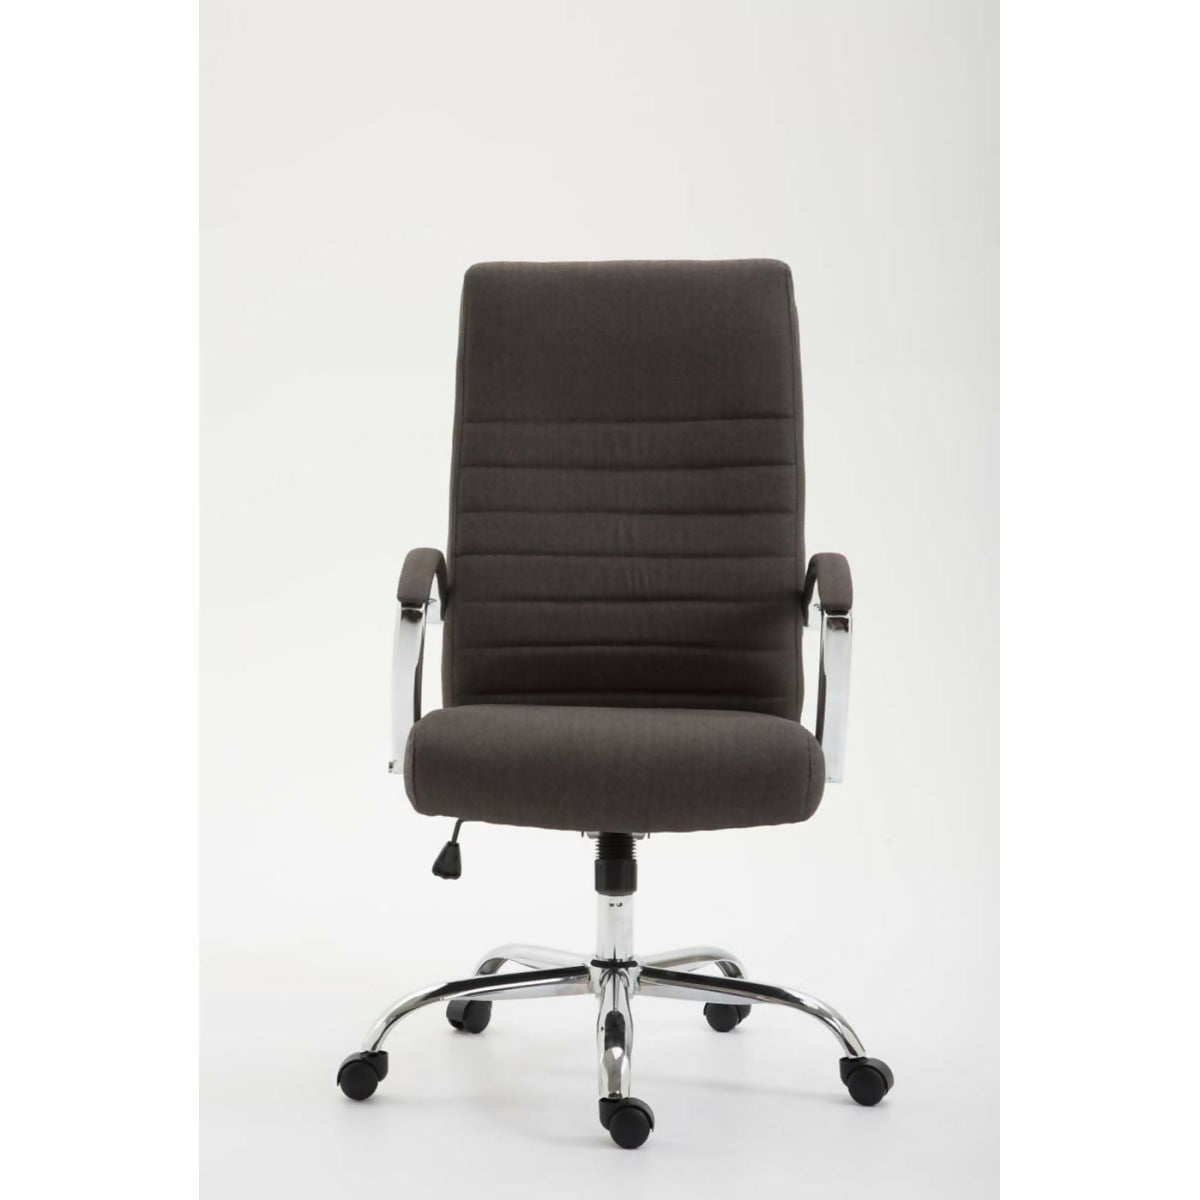 Valais office armchair - Dark gray fabric